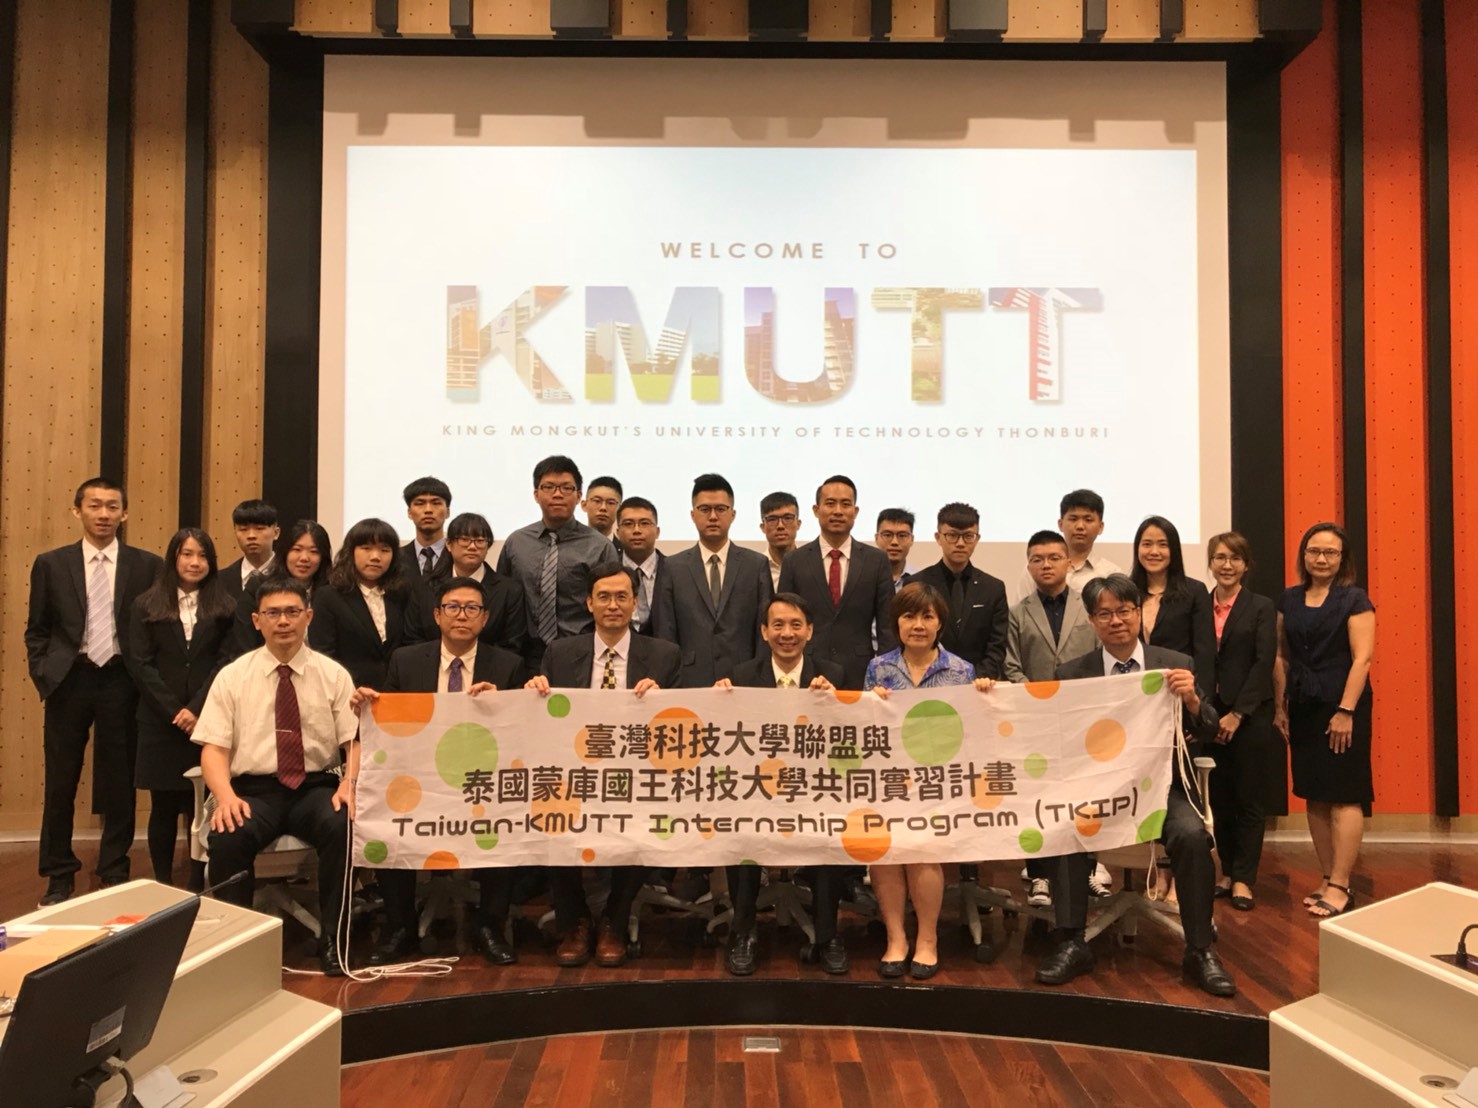 2nd Taiwan-KMUTT Internship Program - in Taiwan and Thailand in the Summer of 2018